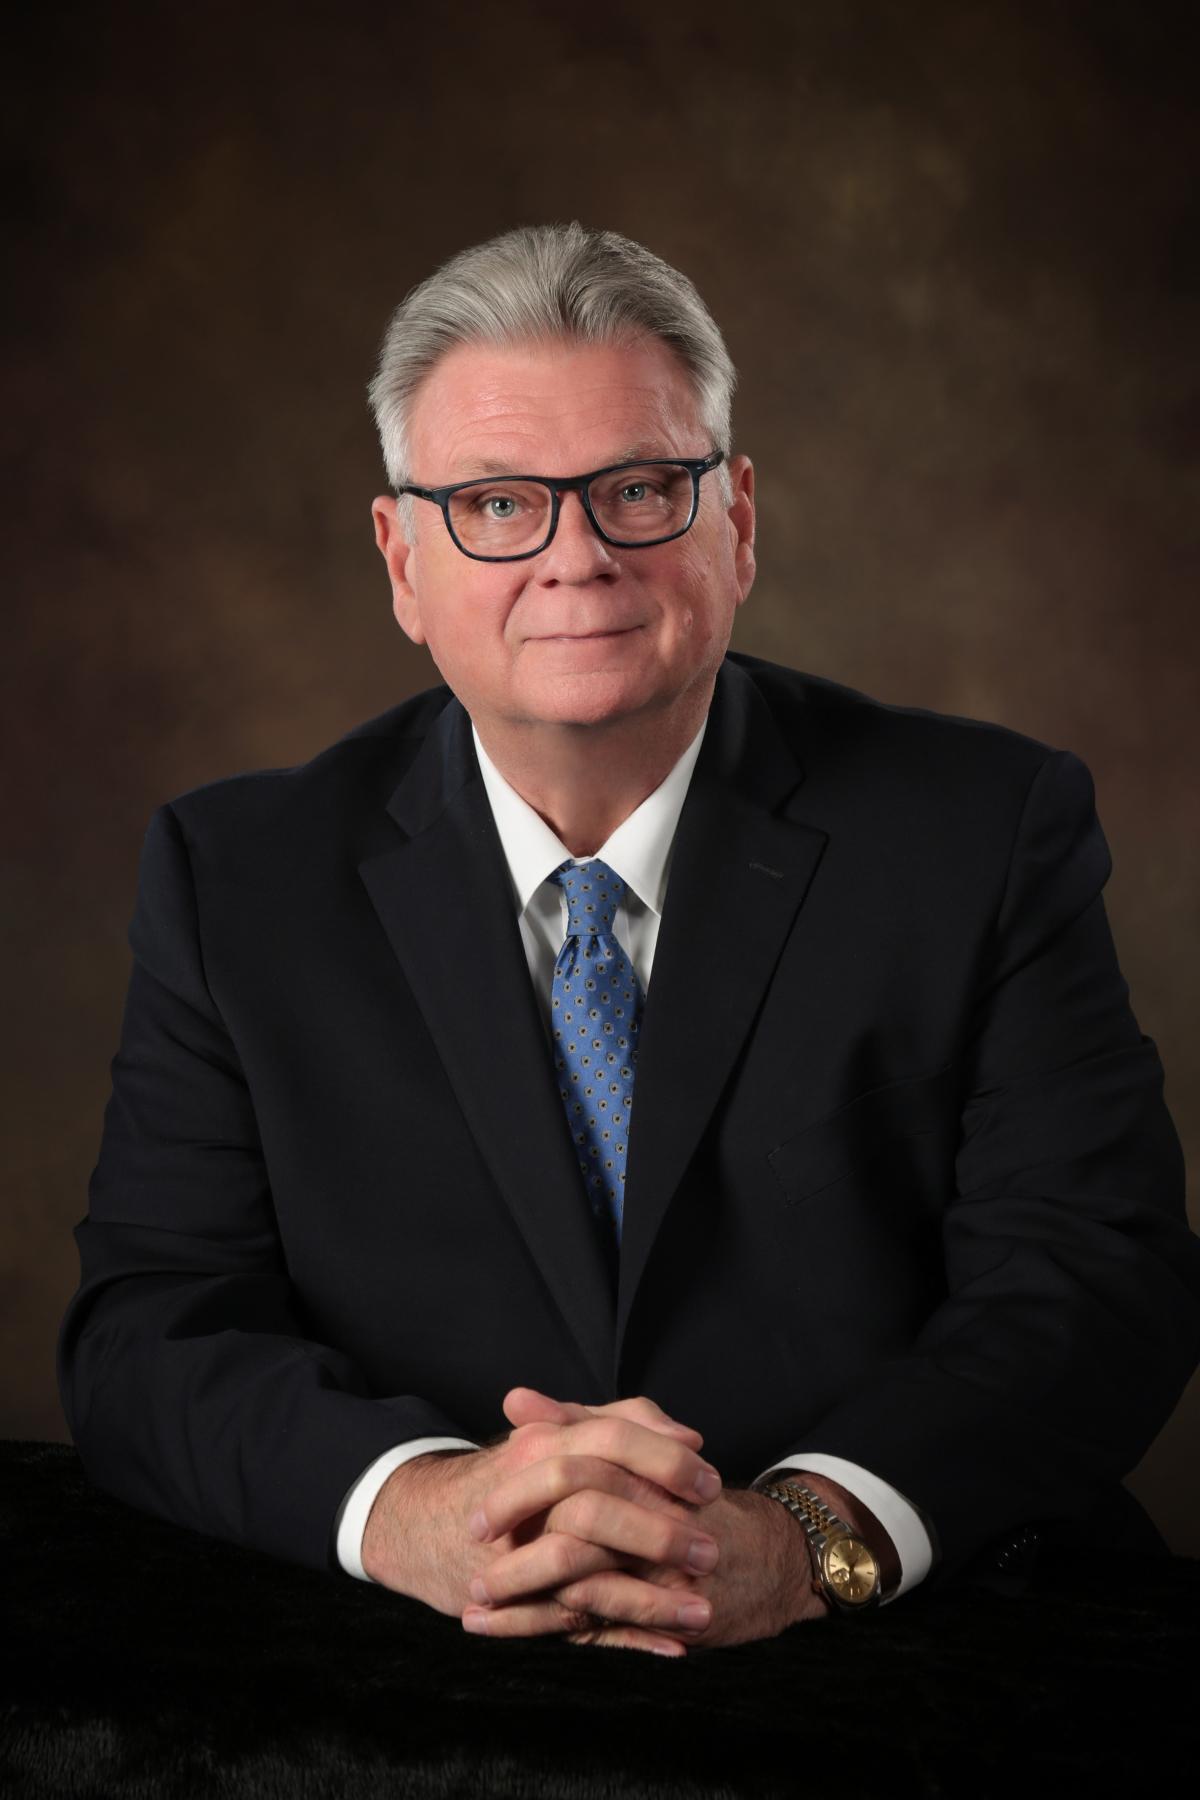 Dr. Jim Murdaugh, President of Tallahassee Community college